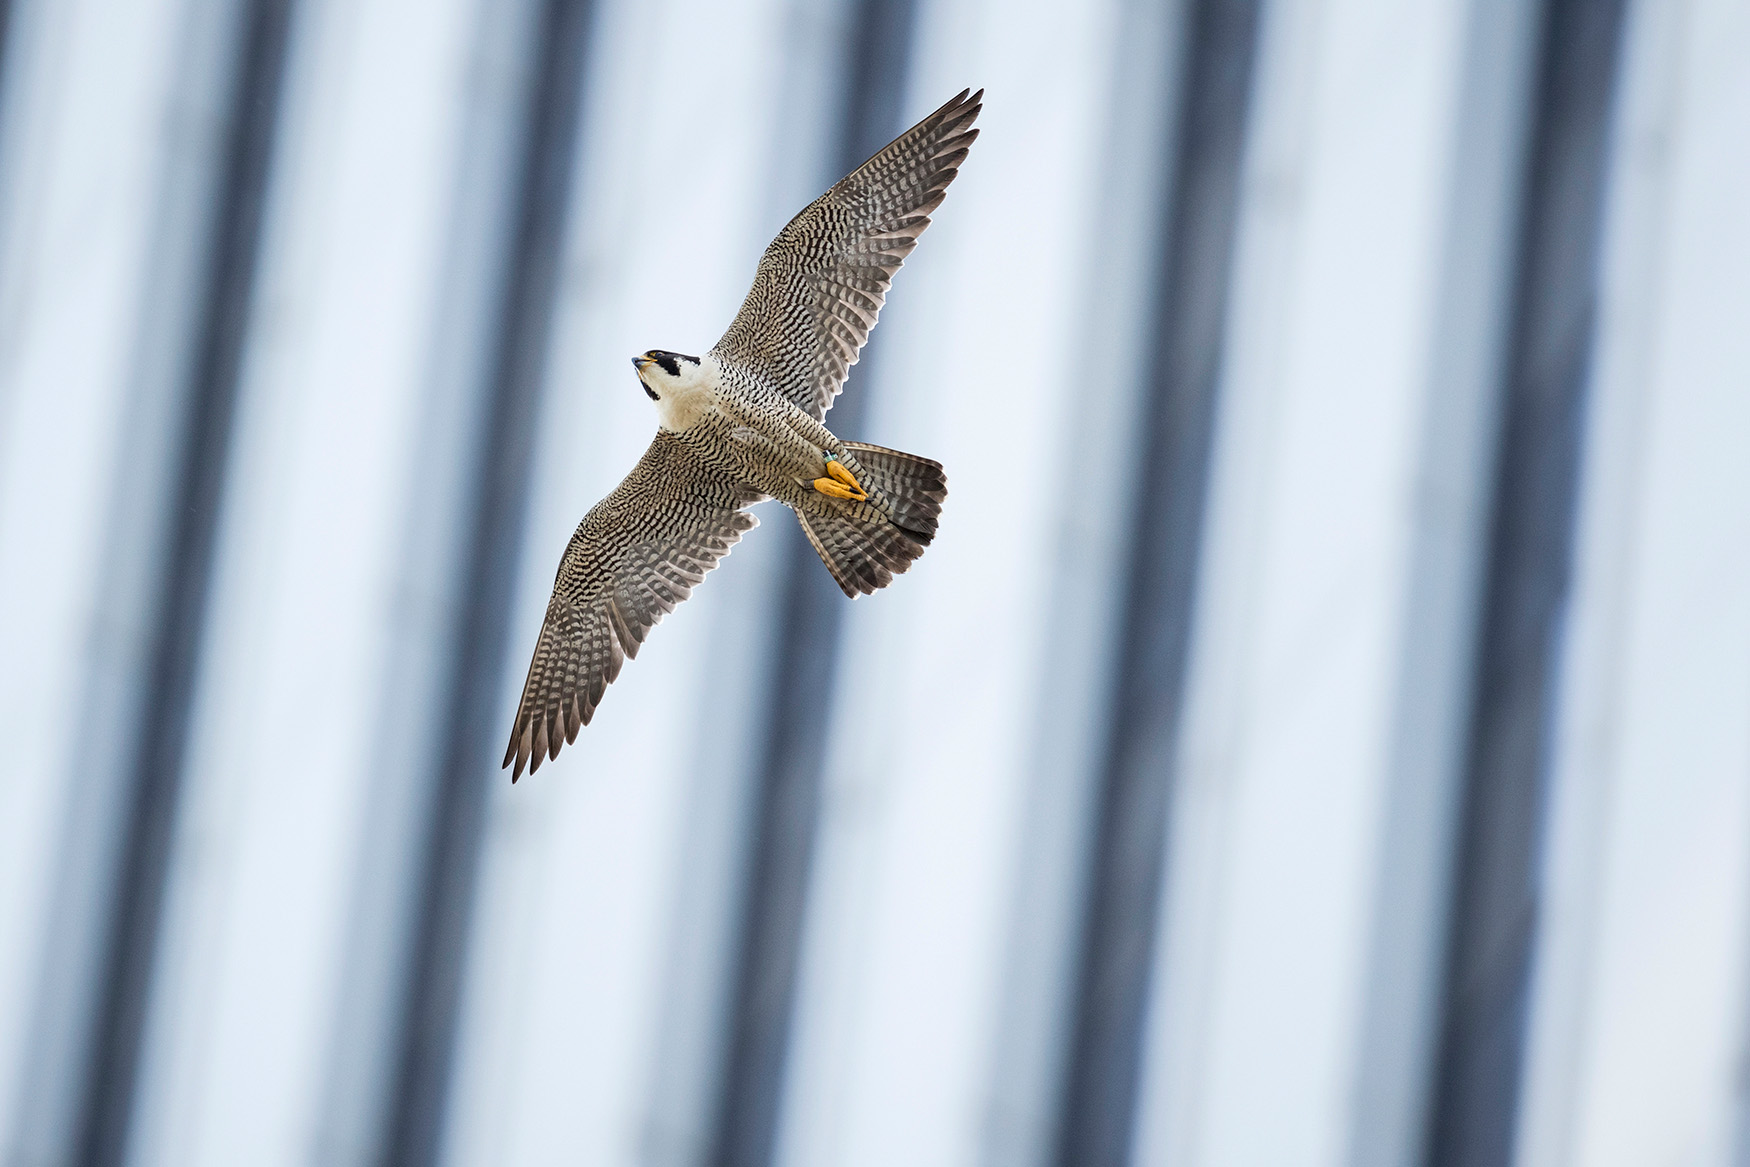 Watch overhead for Peregrine Falcons, which nest near Bryant Park. Photo: François Portmann